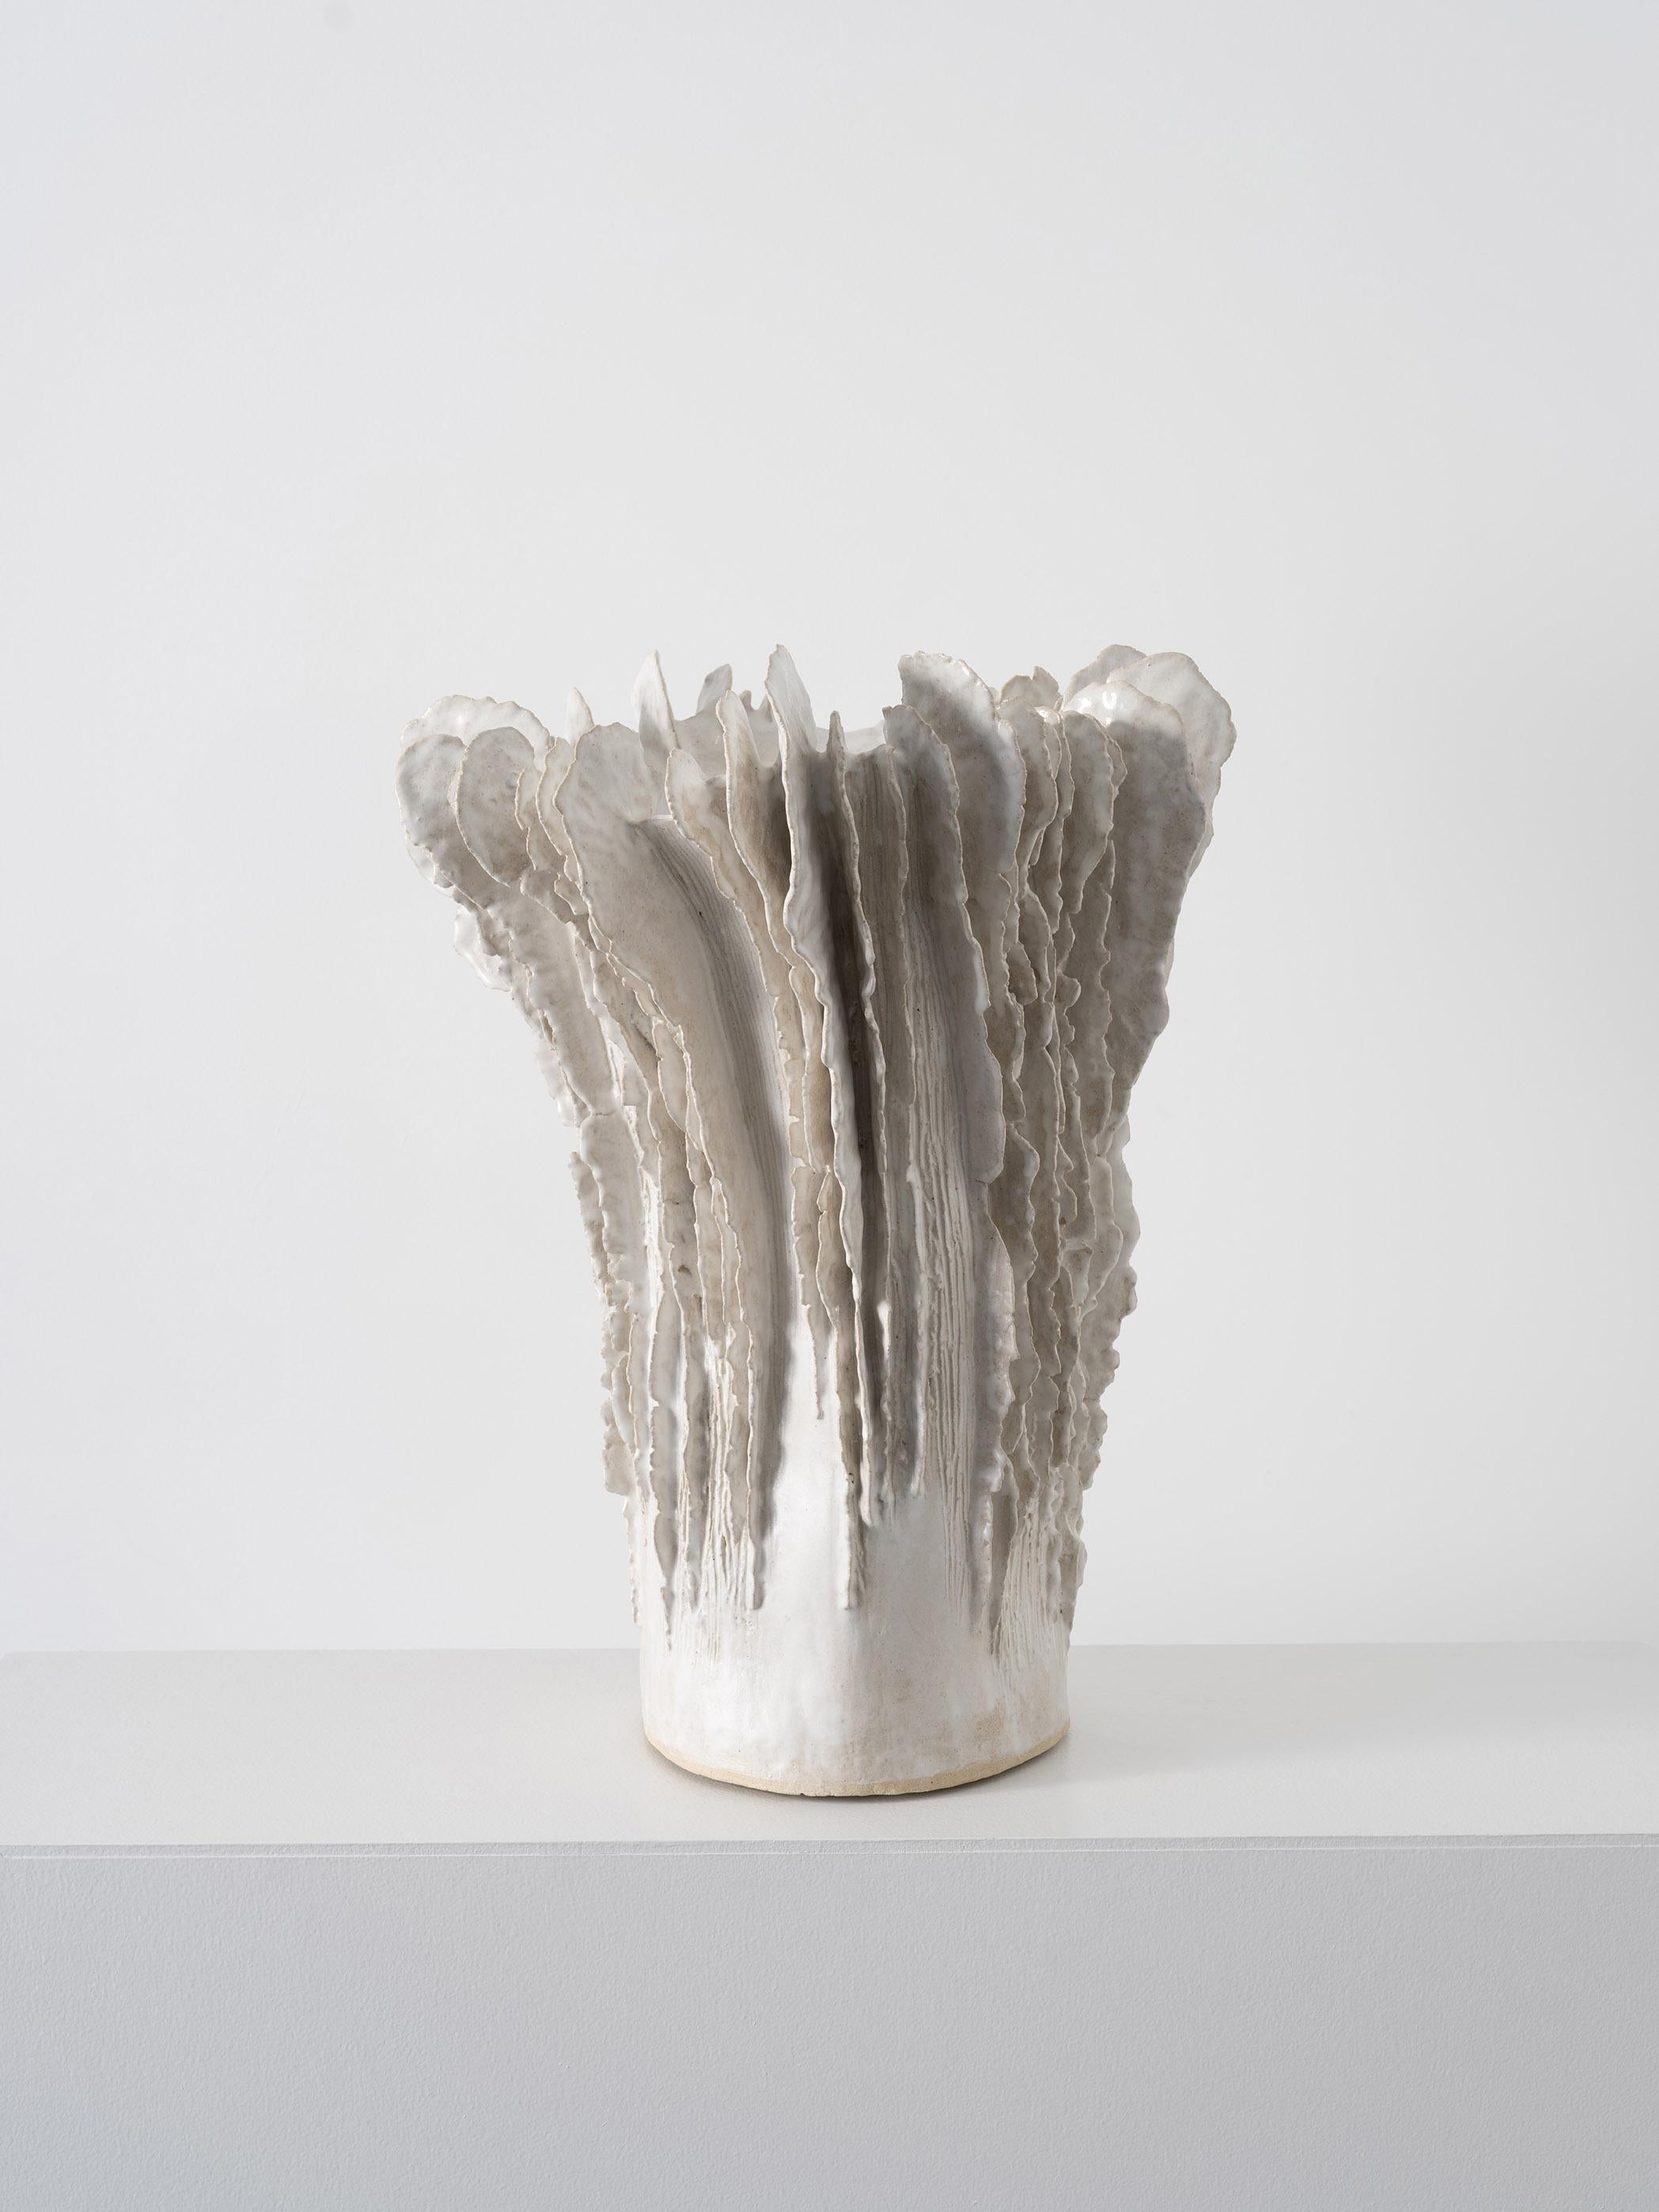 Trish DeMasi.
Lamella Vessel, 2022.
Glazed ceramic.
Measures: 17 x 17 x 22.5 in.